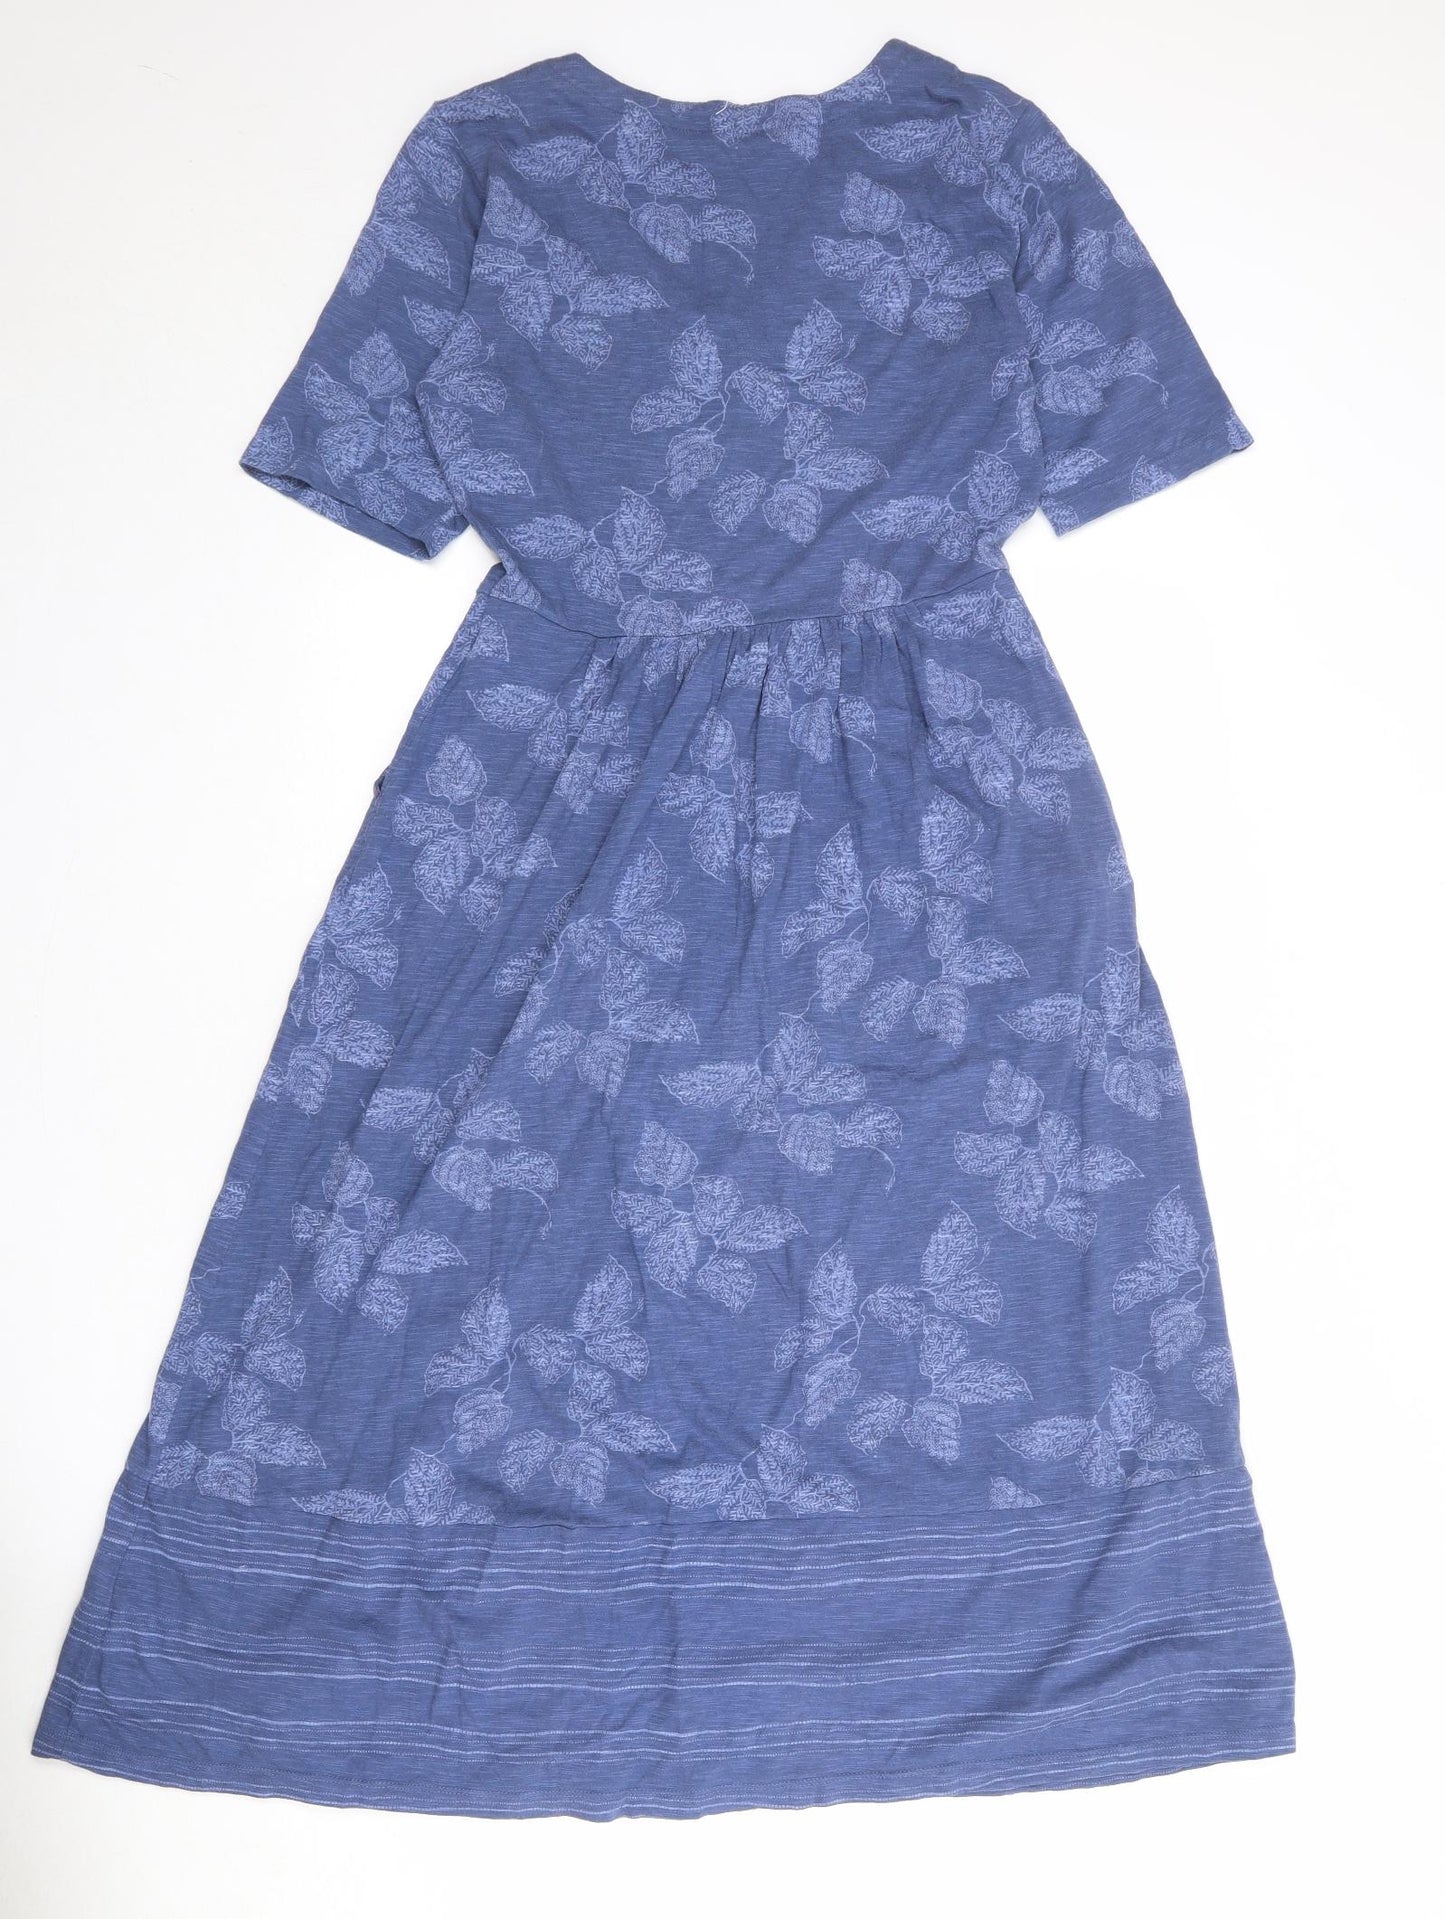 White Stuff Womens Blue Geometric Cotton T-Shirt Dress Size 10 V-Neck Button - Leaf pattern